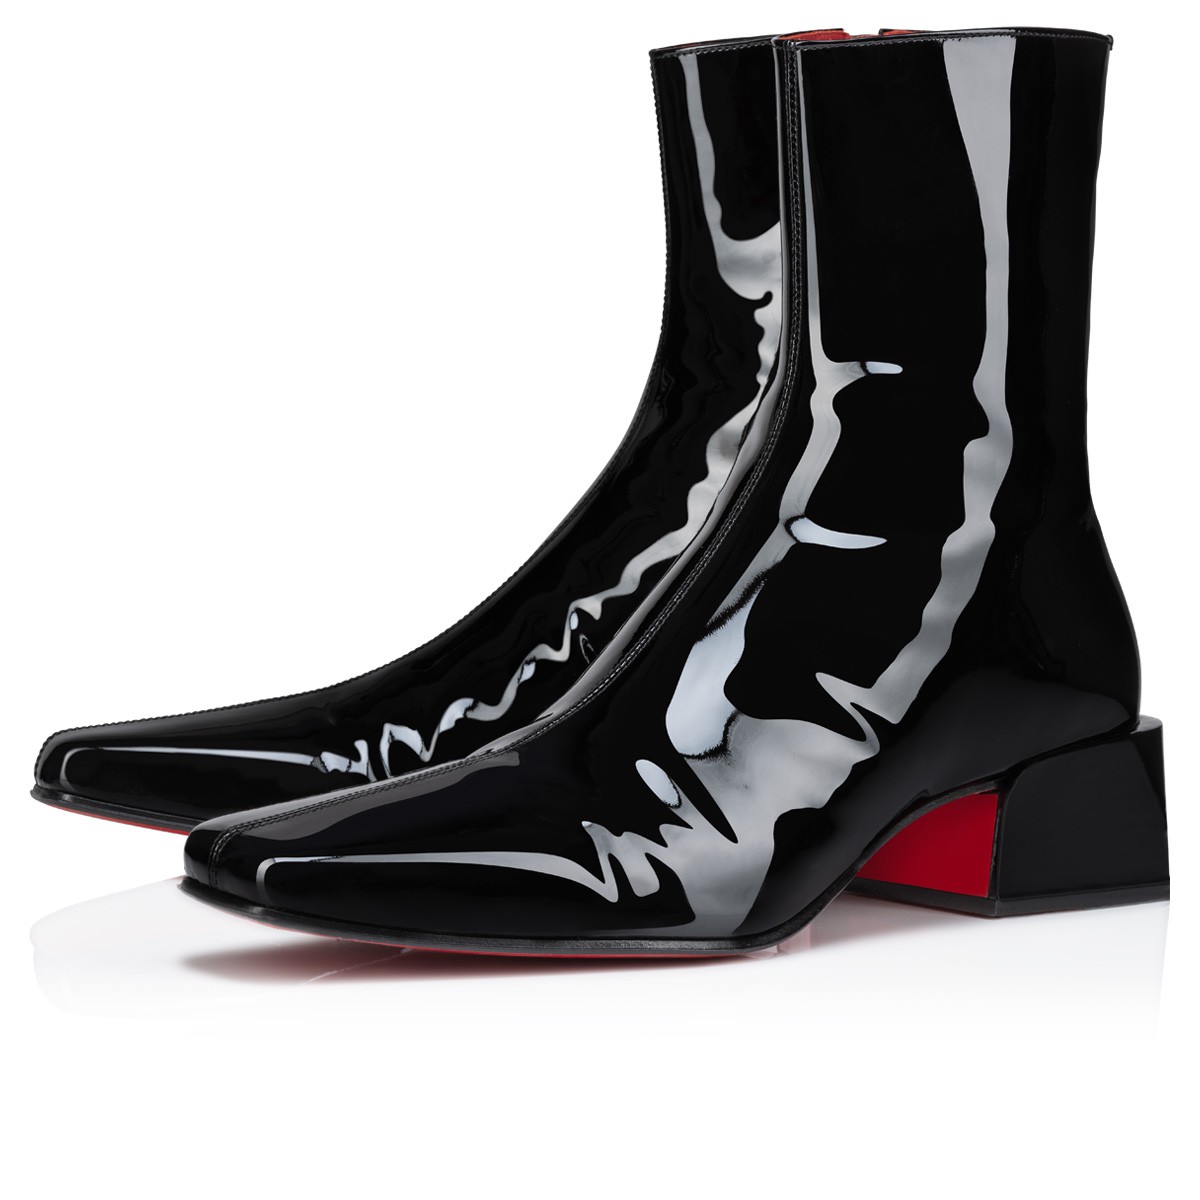 Alleo Boot 40 Black Patent calf leather - 鞋履- Christian Louboutin